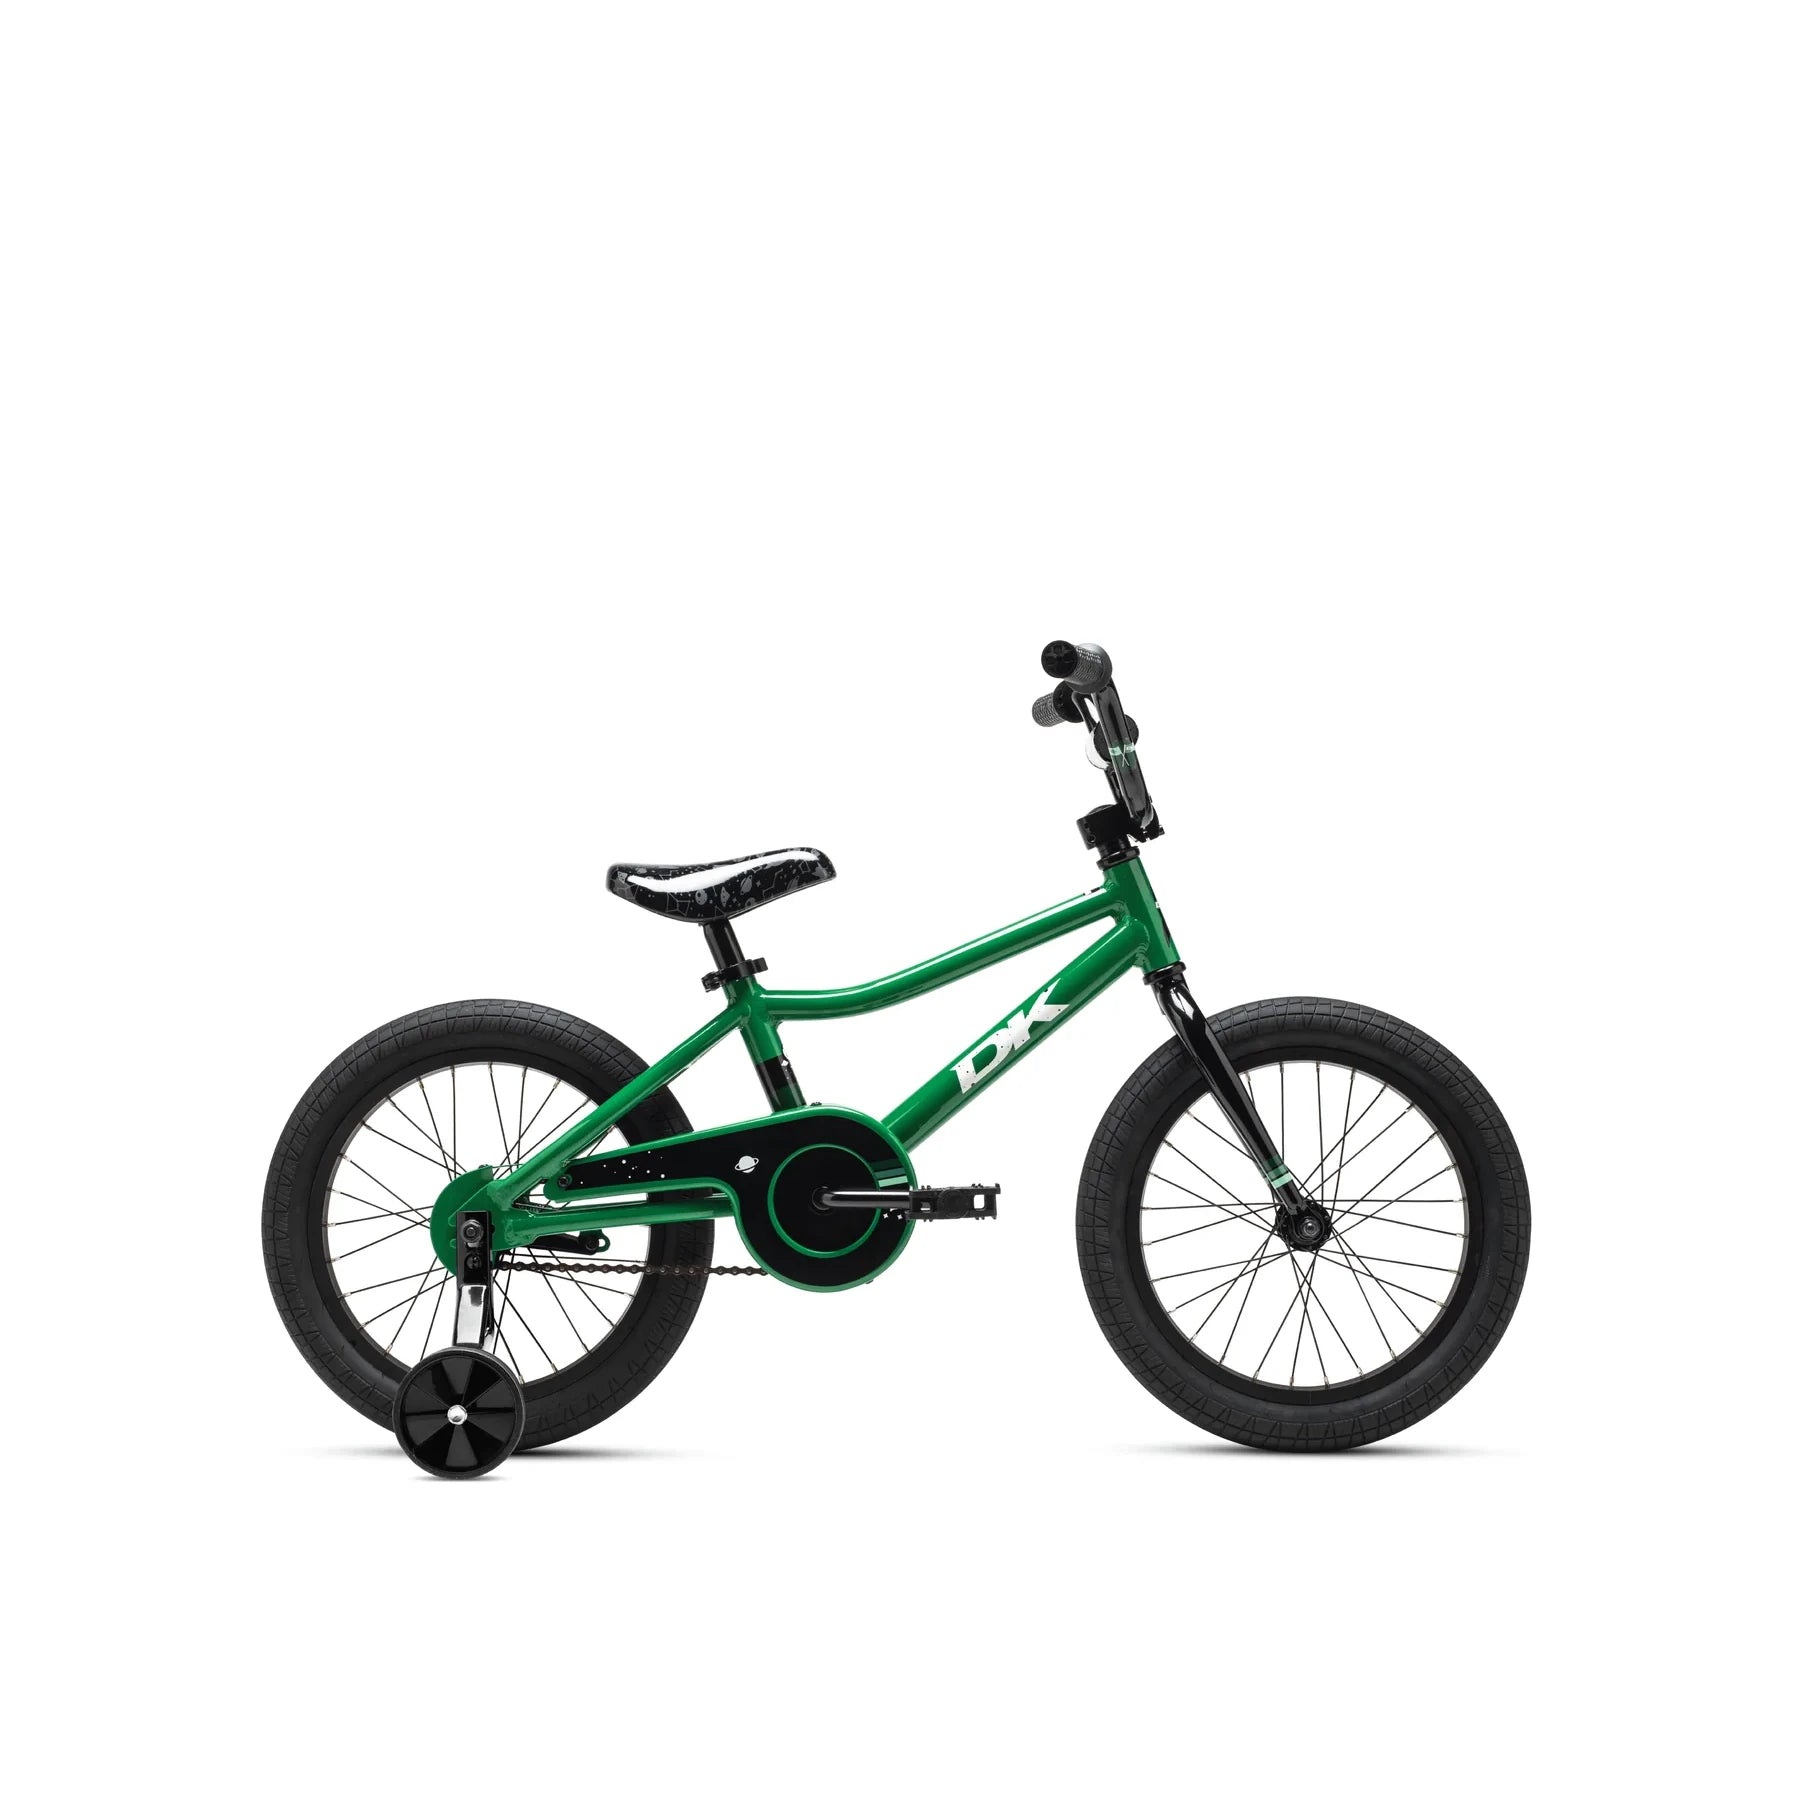 DK Devo 16" Complete BMX Bike - w/ training wheels - Green